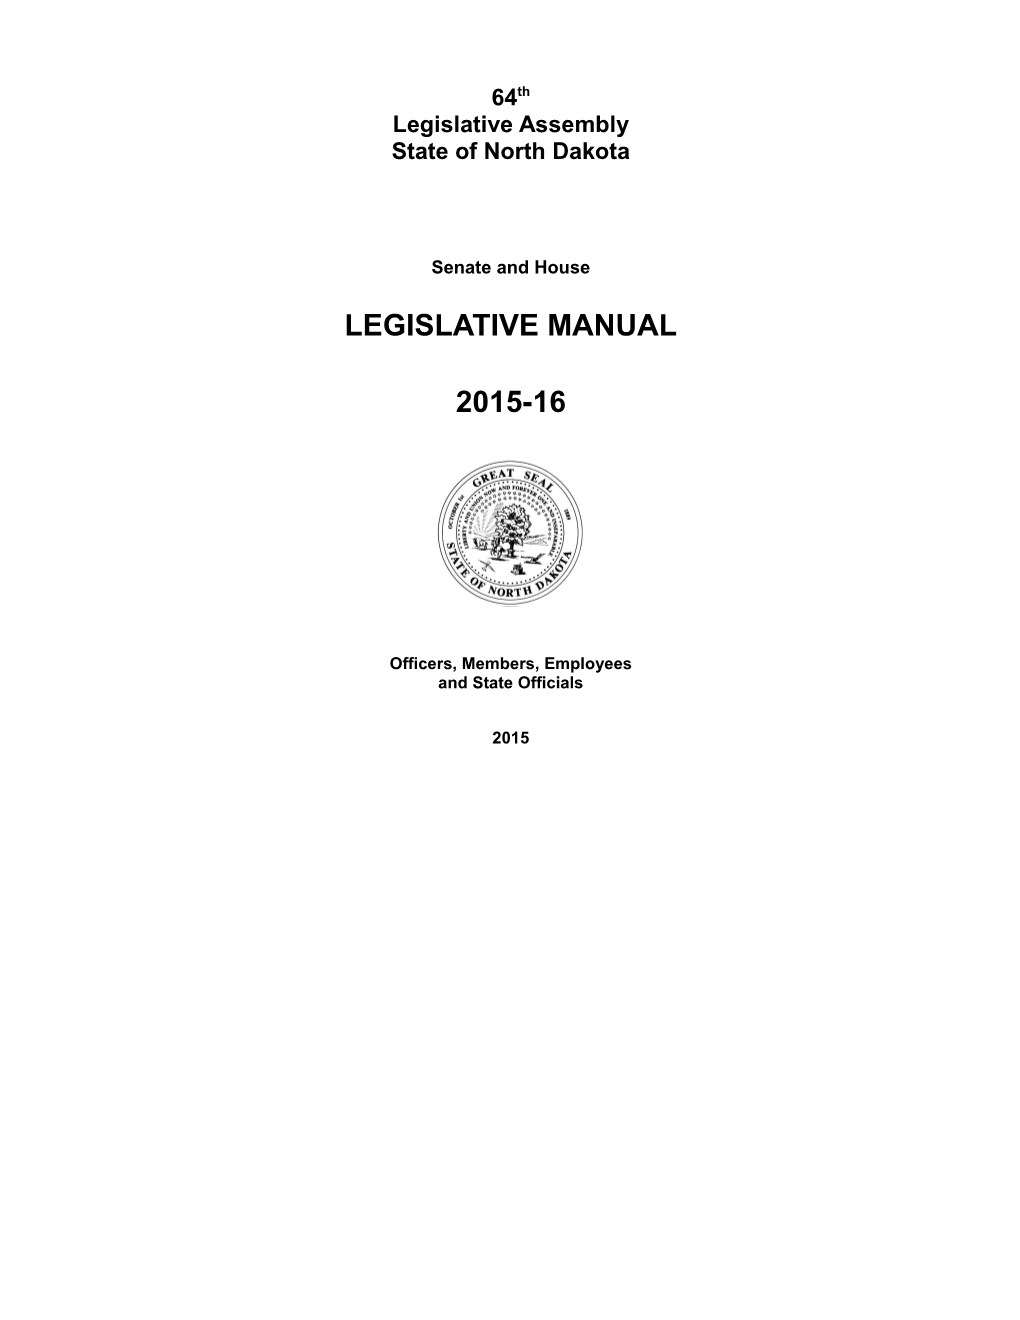 Legislative Manual 2015-16